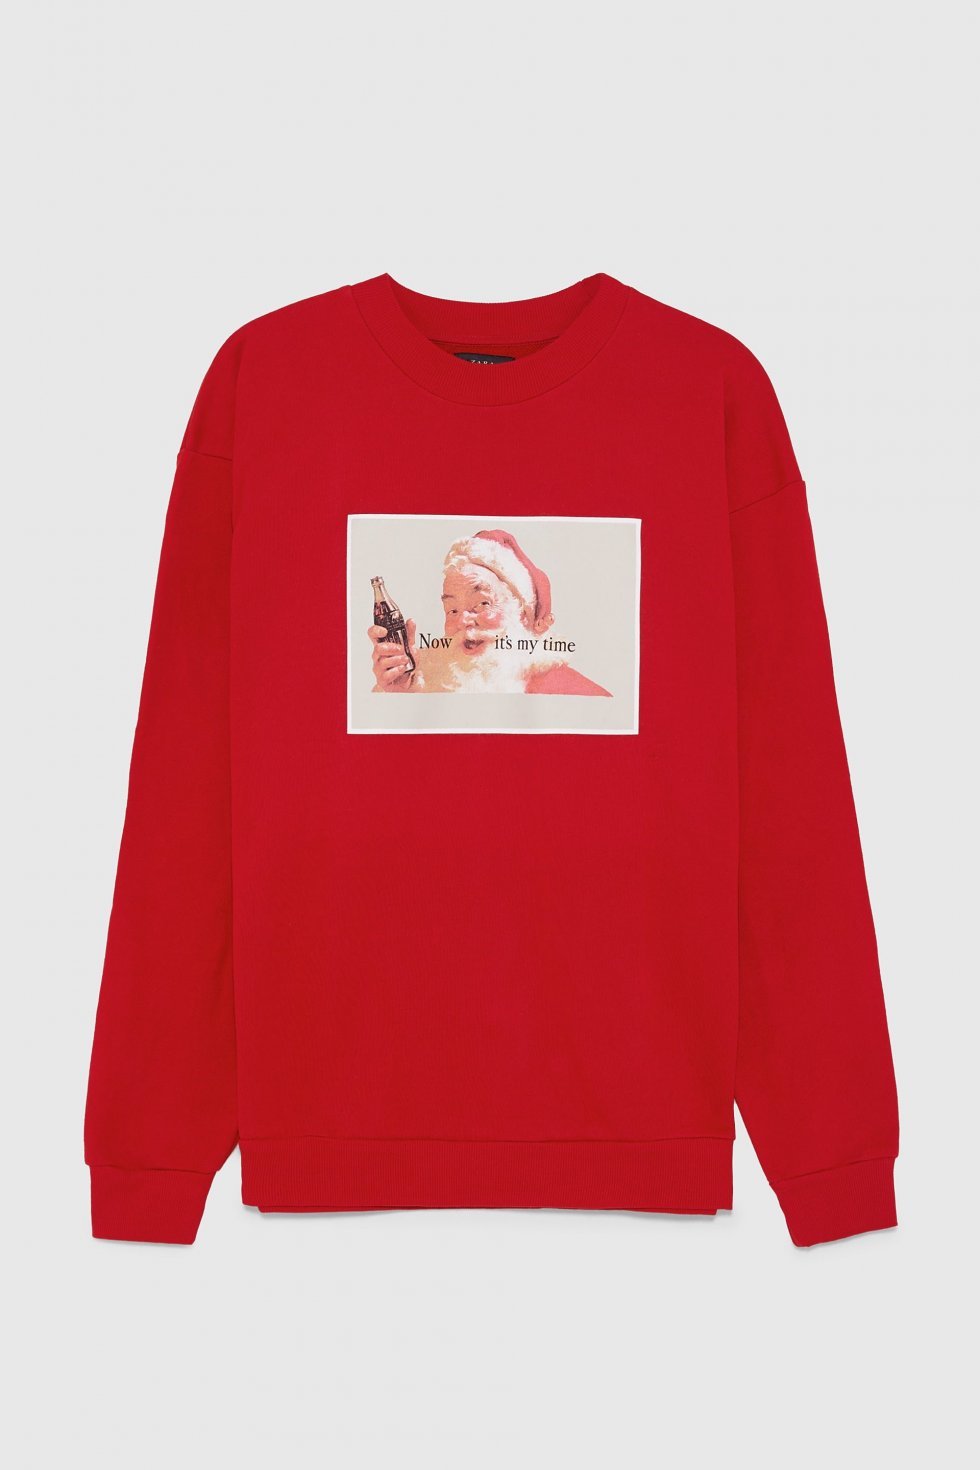 Zara - Coca-Cola Julesweatshirt, 299 kroner.  - Klar til julefrokost: 25 (grimme) juletrøjer 